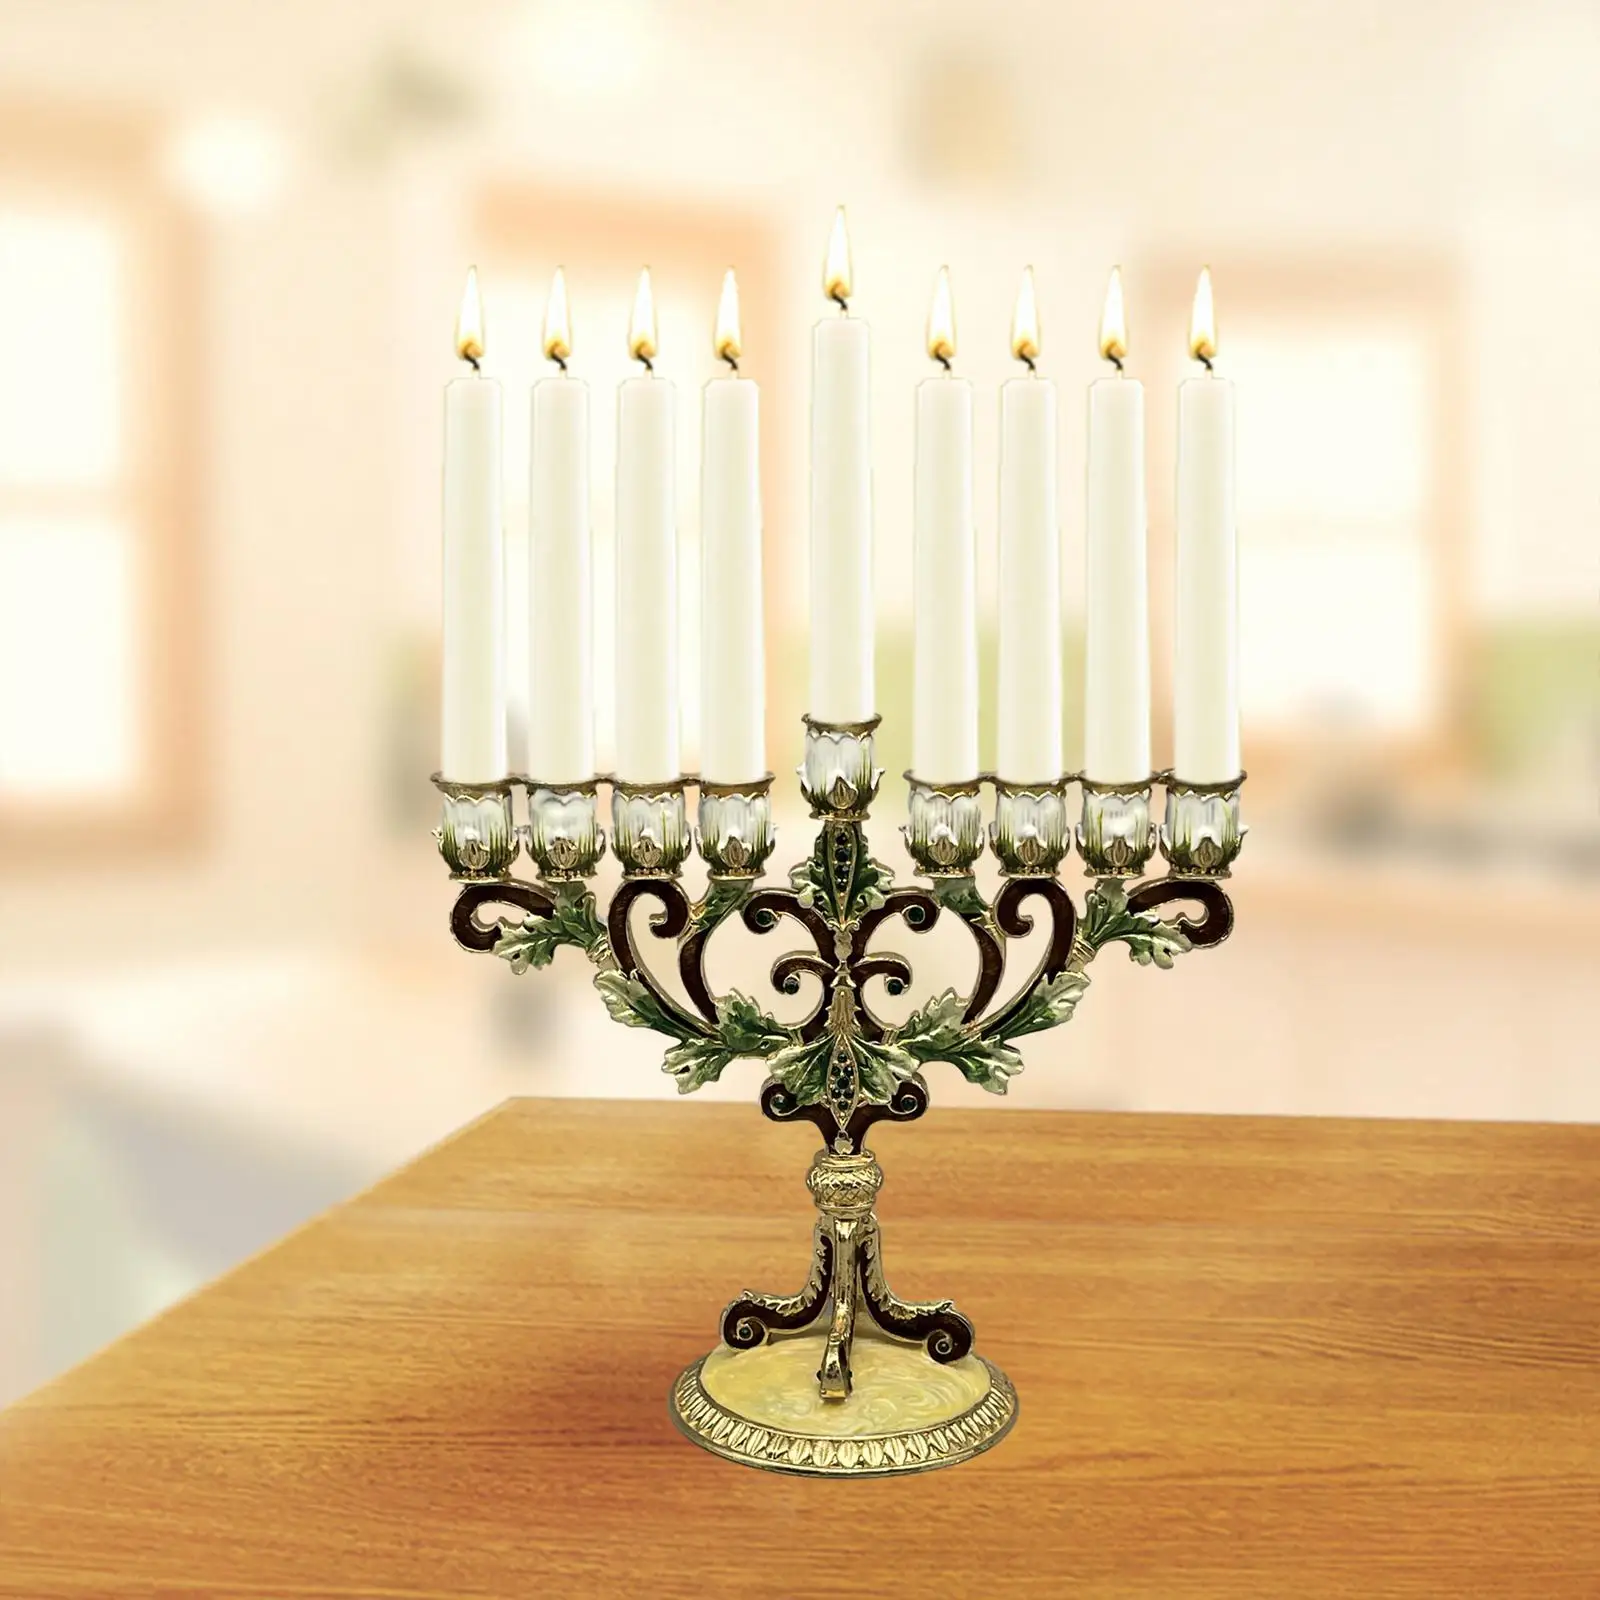 Hanukkah Menorah 9 Branch Candle Holder Candelabra Candlestick for Dining Room